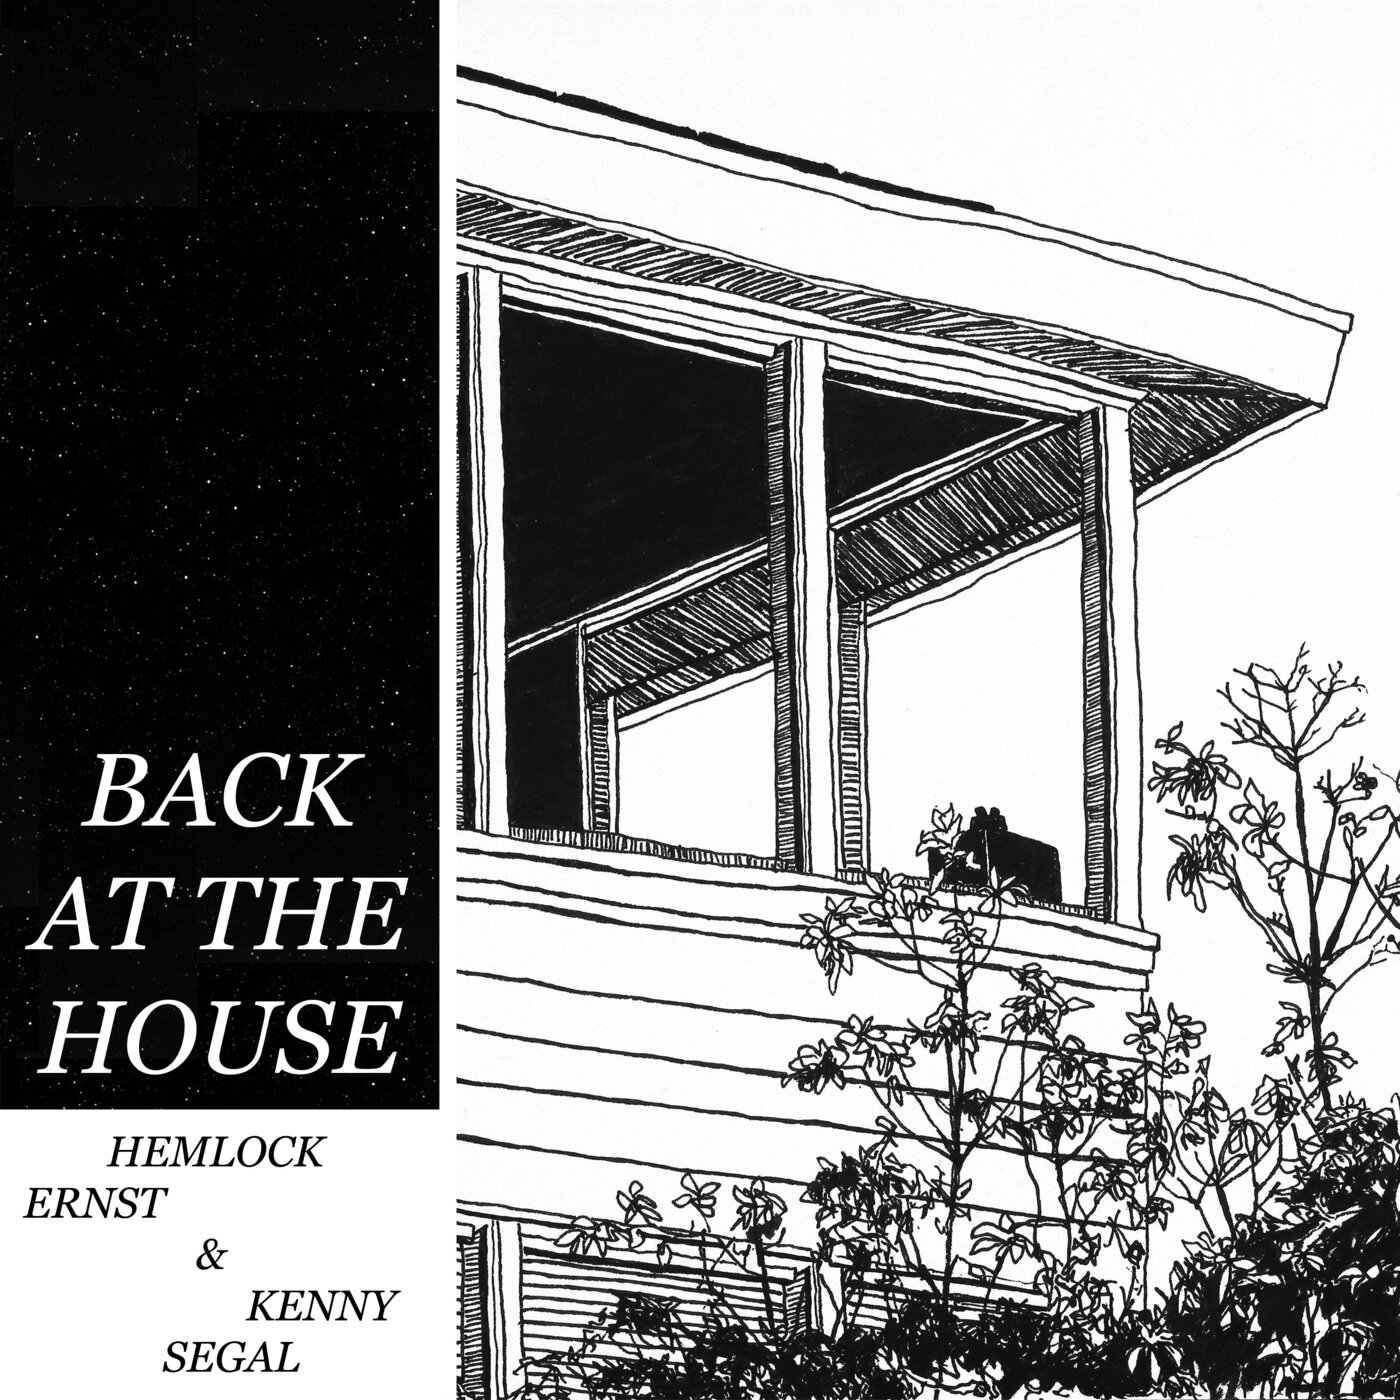 10 Hemlock Ernst and Kenny SegalBack At The House.jpg